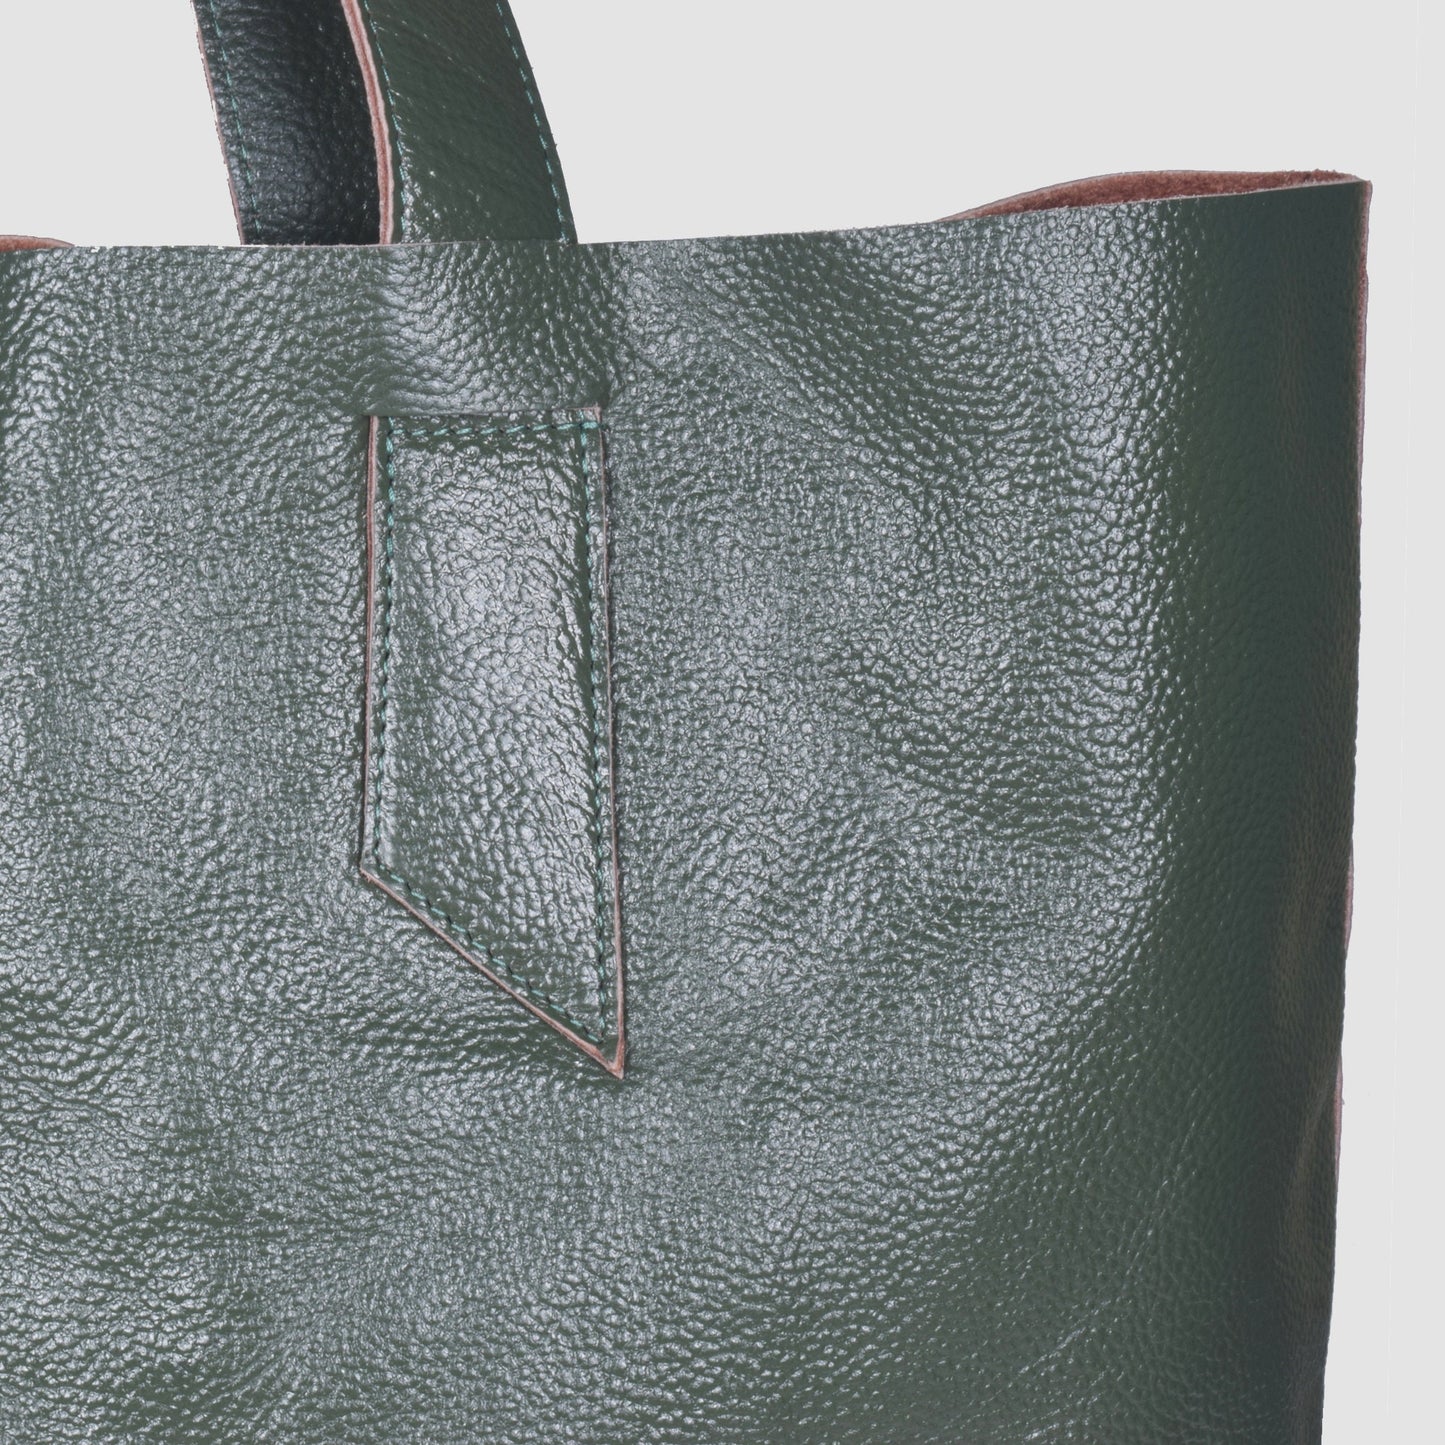 Green Leather Tote Bag Naked Edge Leather Purse Shopper Bag Shoulder Womens Large Market Bag Unlined Leather Tote Travelling Tote bag